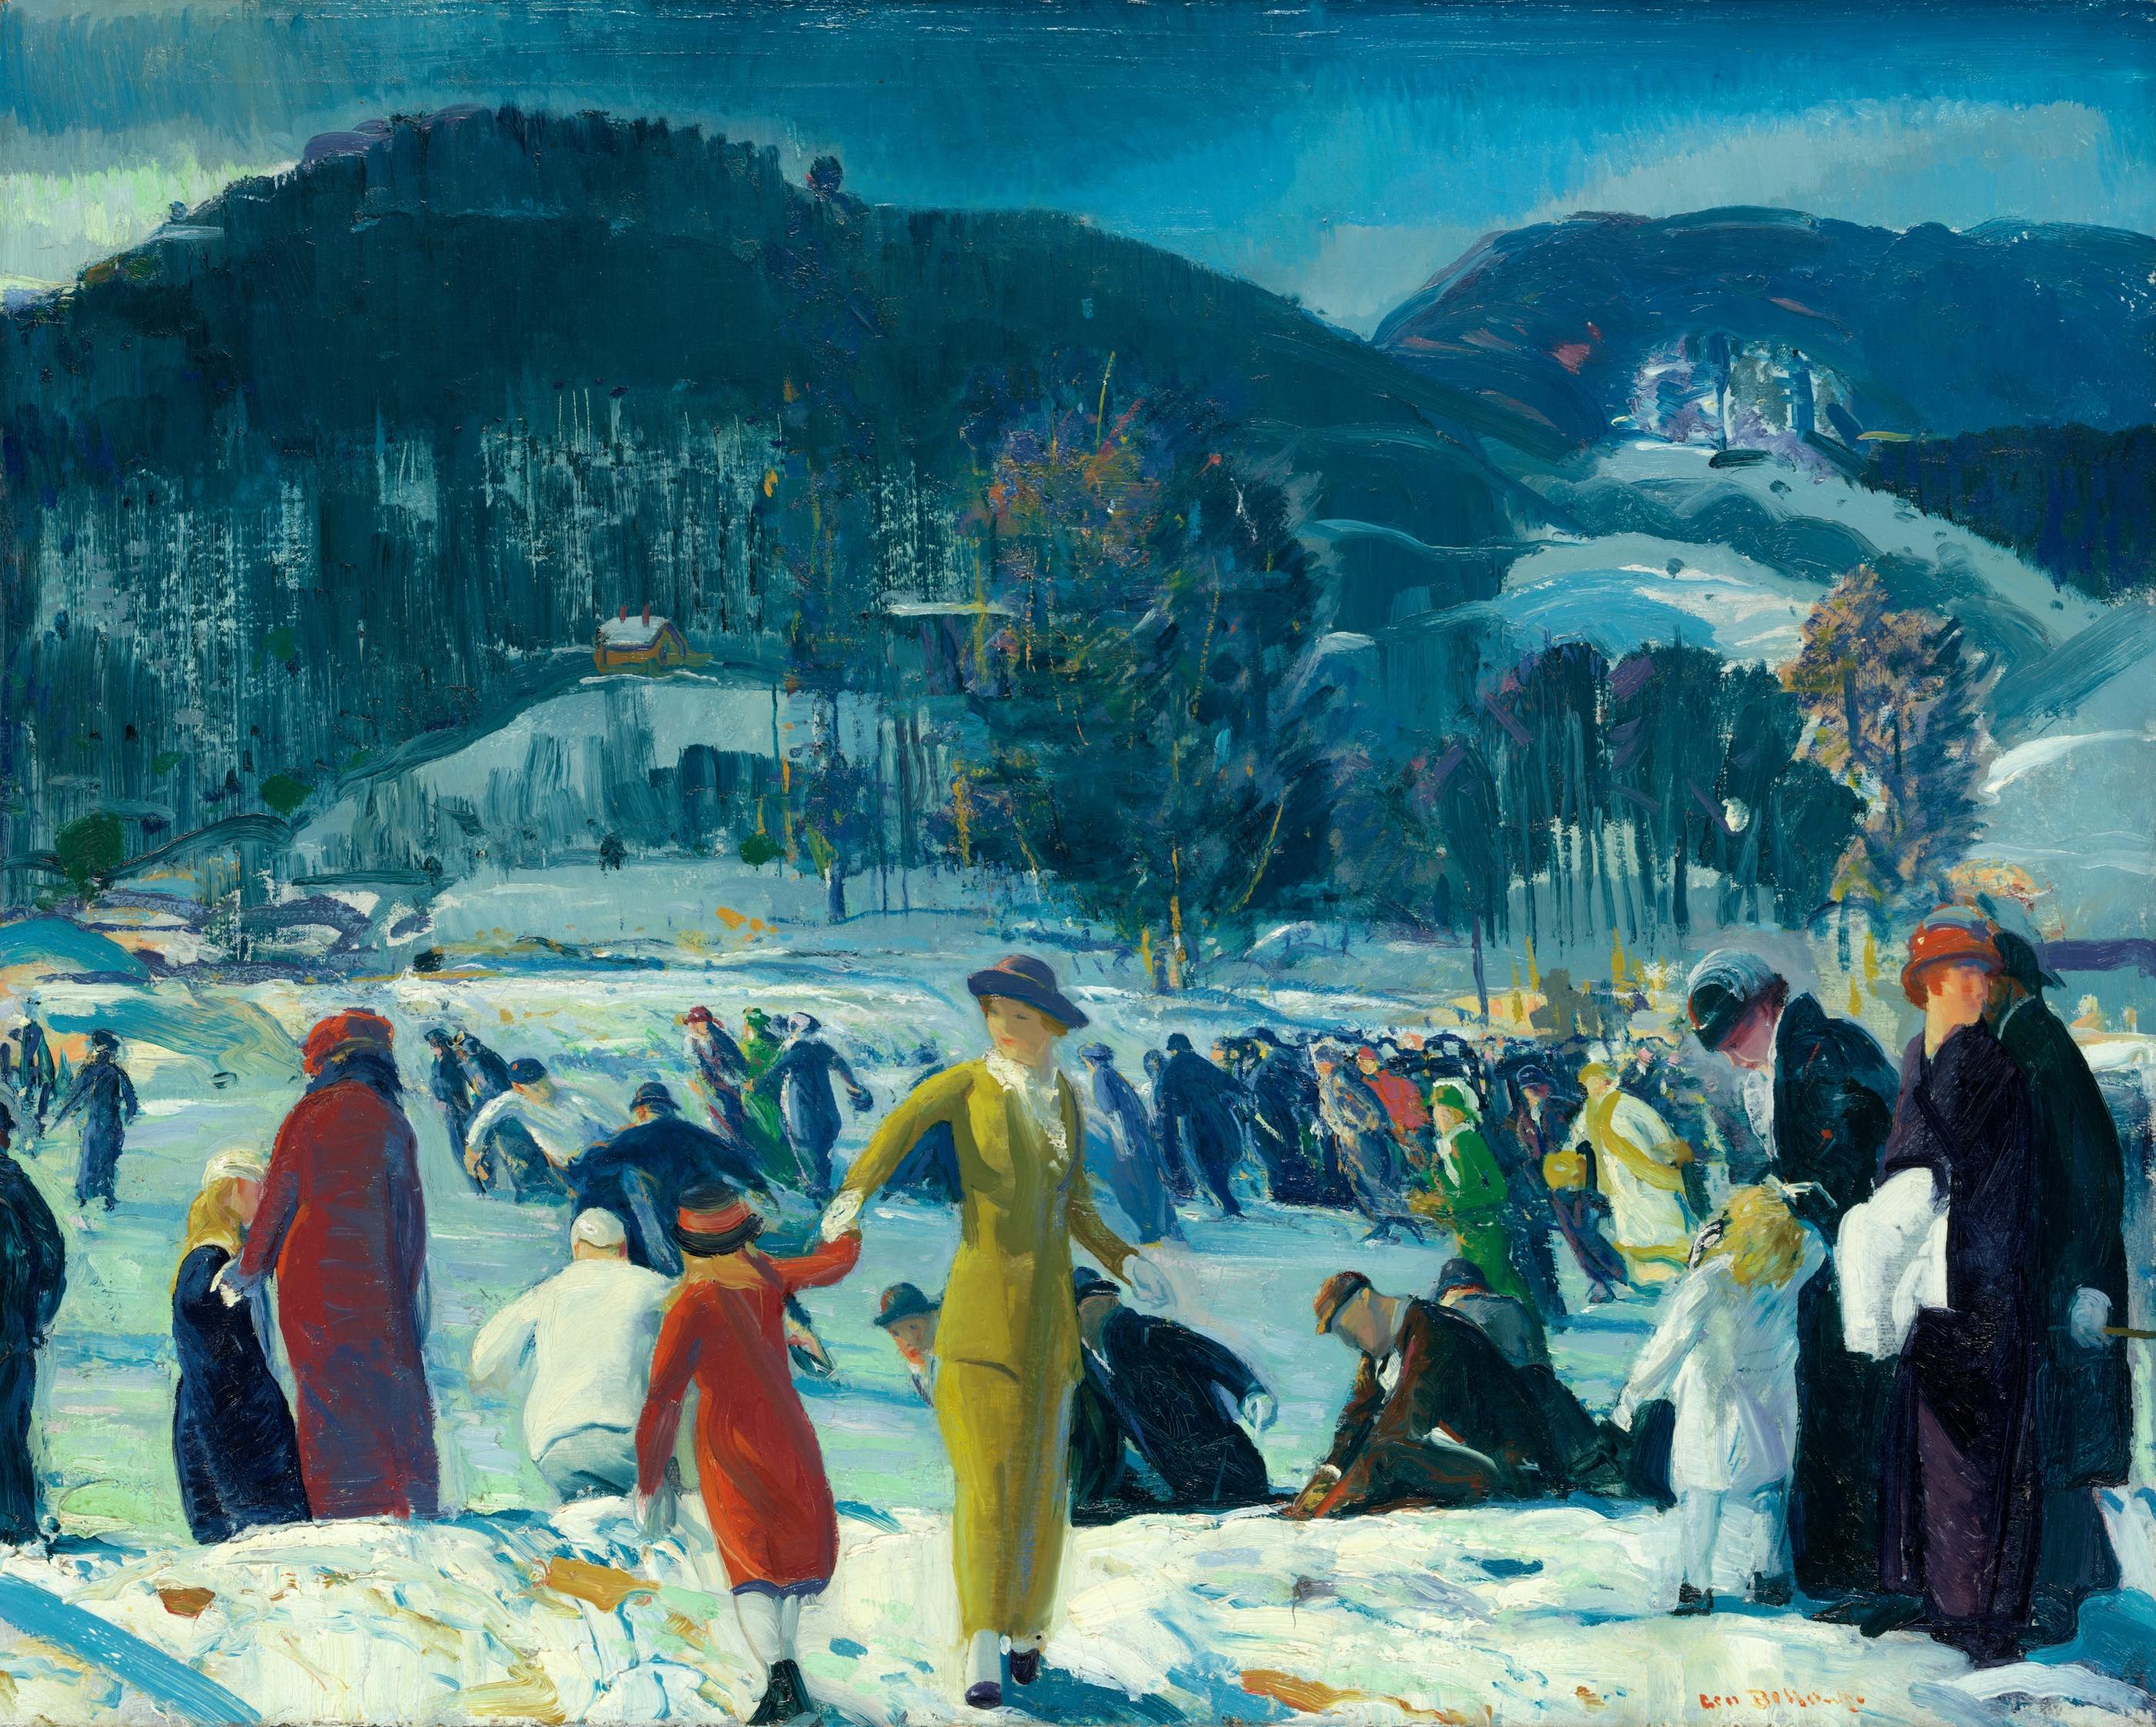 L’Amour de l’hiver by George Bellows - 1914 - 81.6 × 101.6 cm Art Institute of Chicago